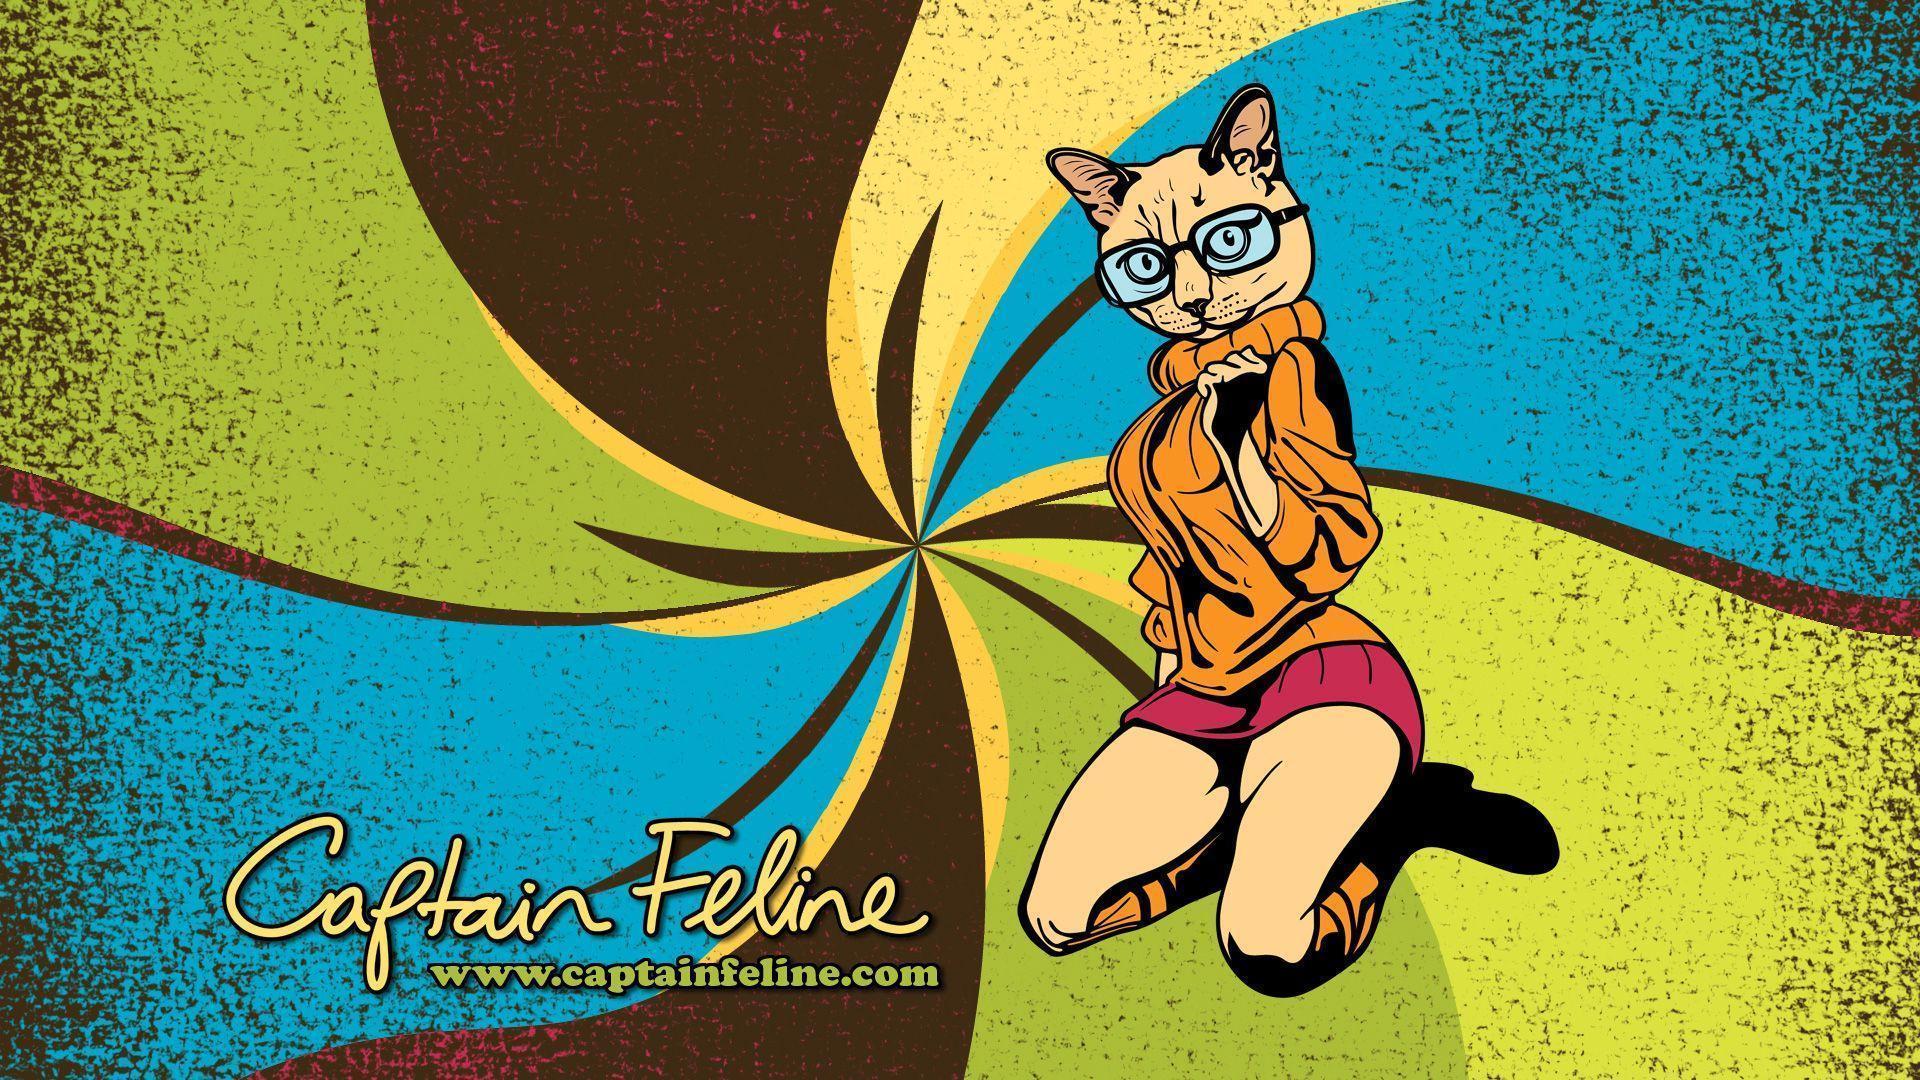 Captain Feline Free Wallpaper. Captain Feline T Shirts